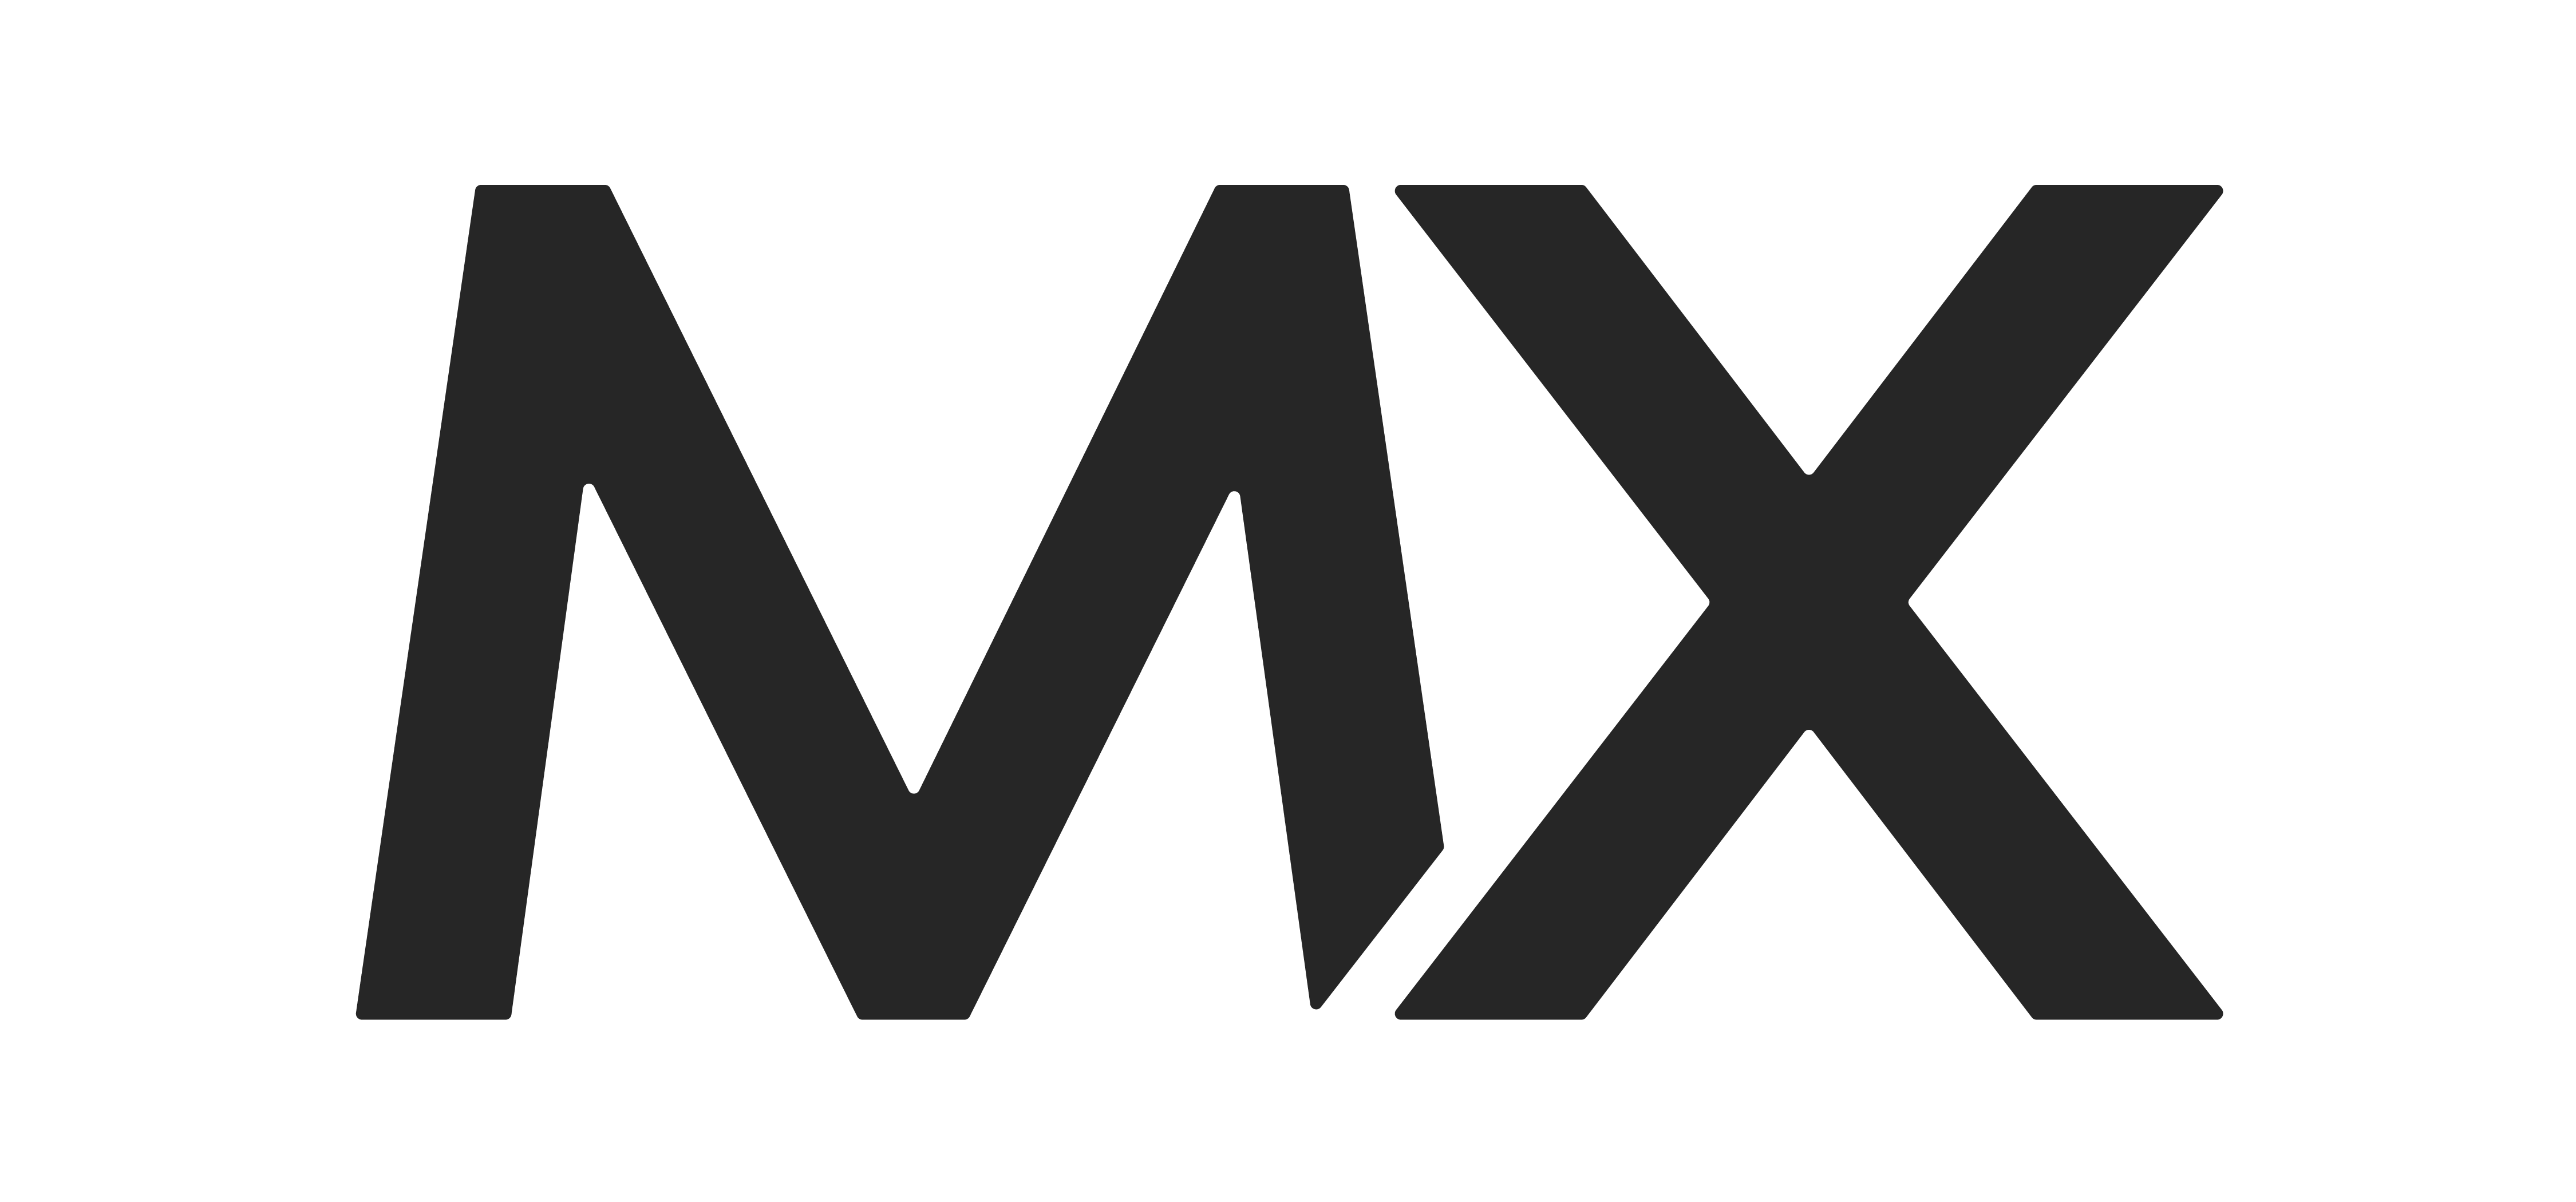 MX Technologies